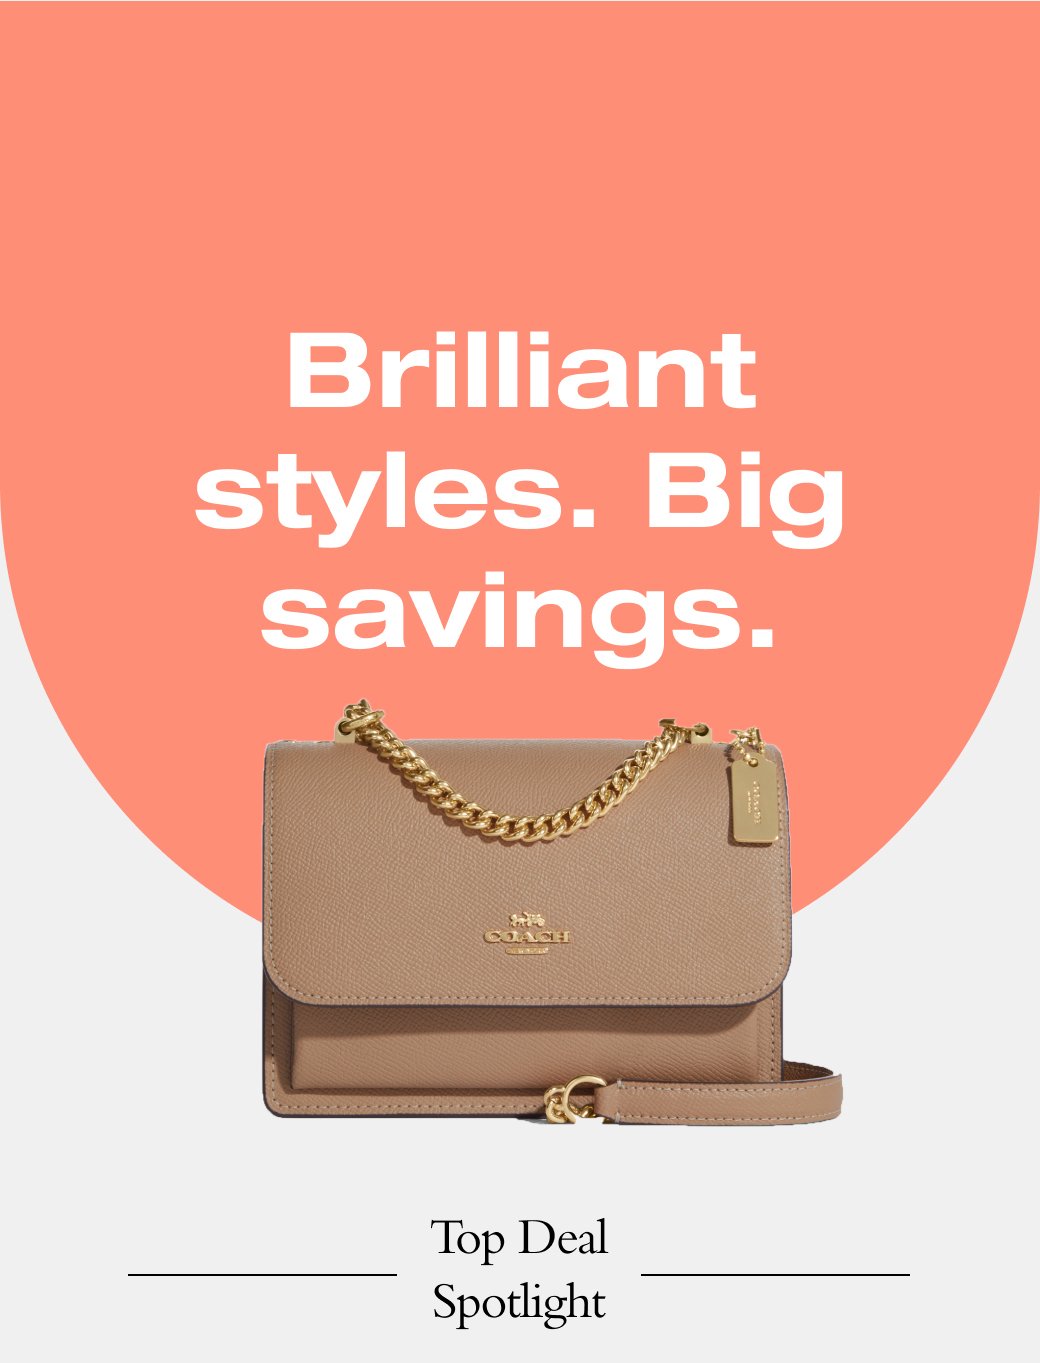 Brilliant styles. Big savings. Top Deal Spotlight